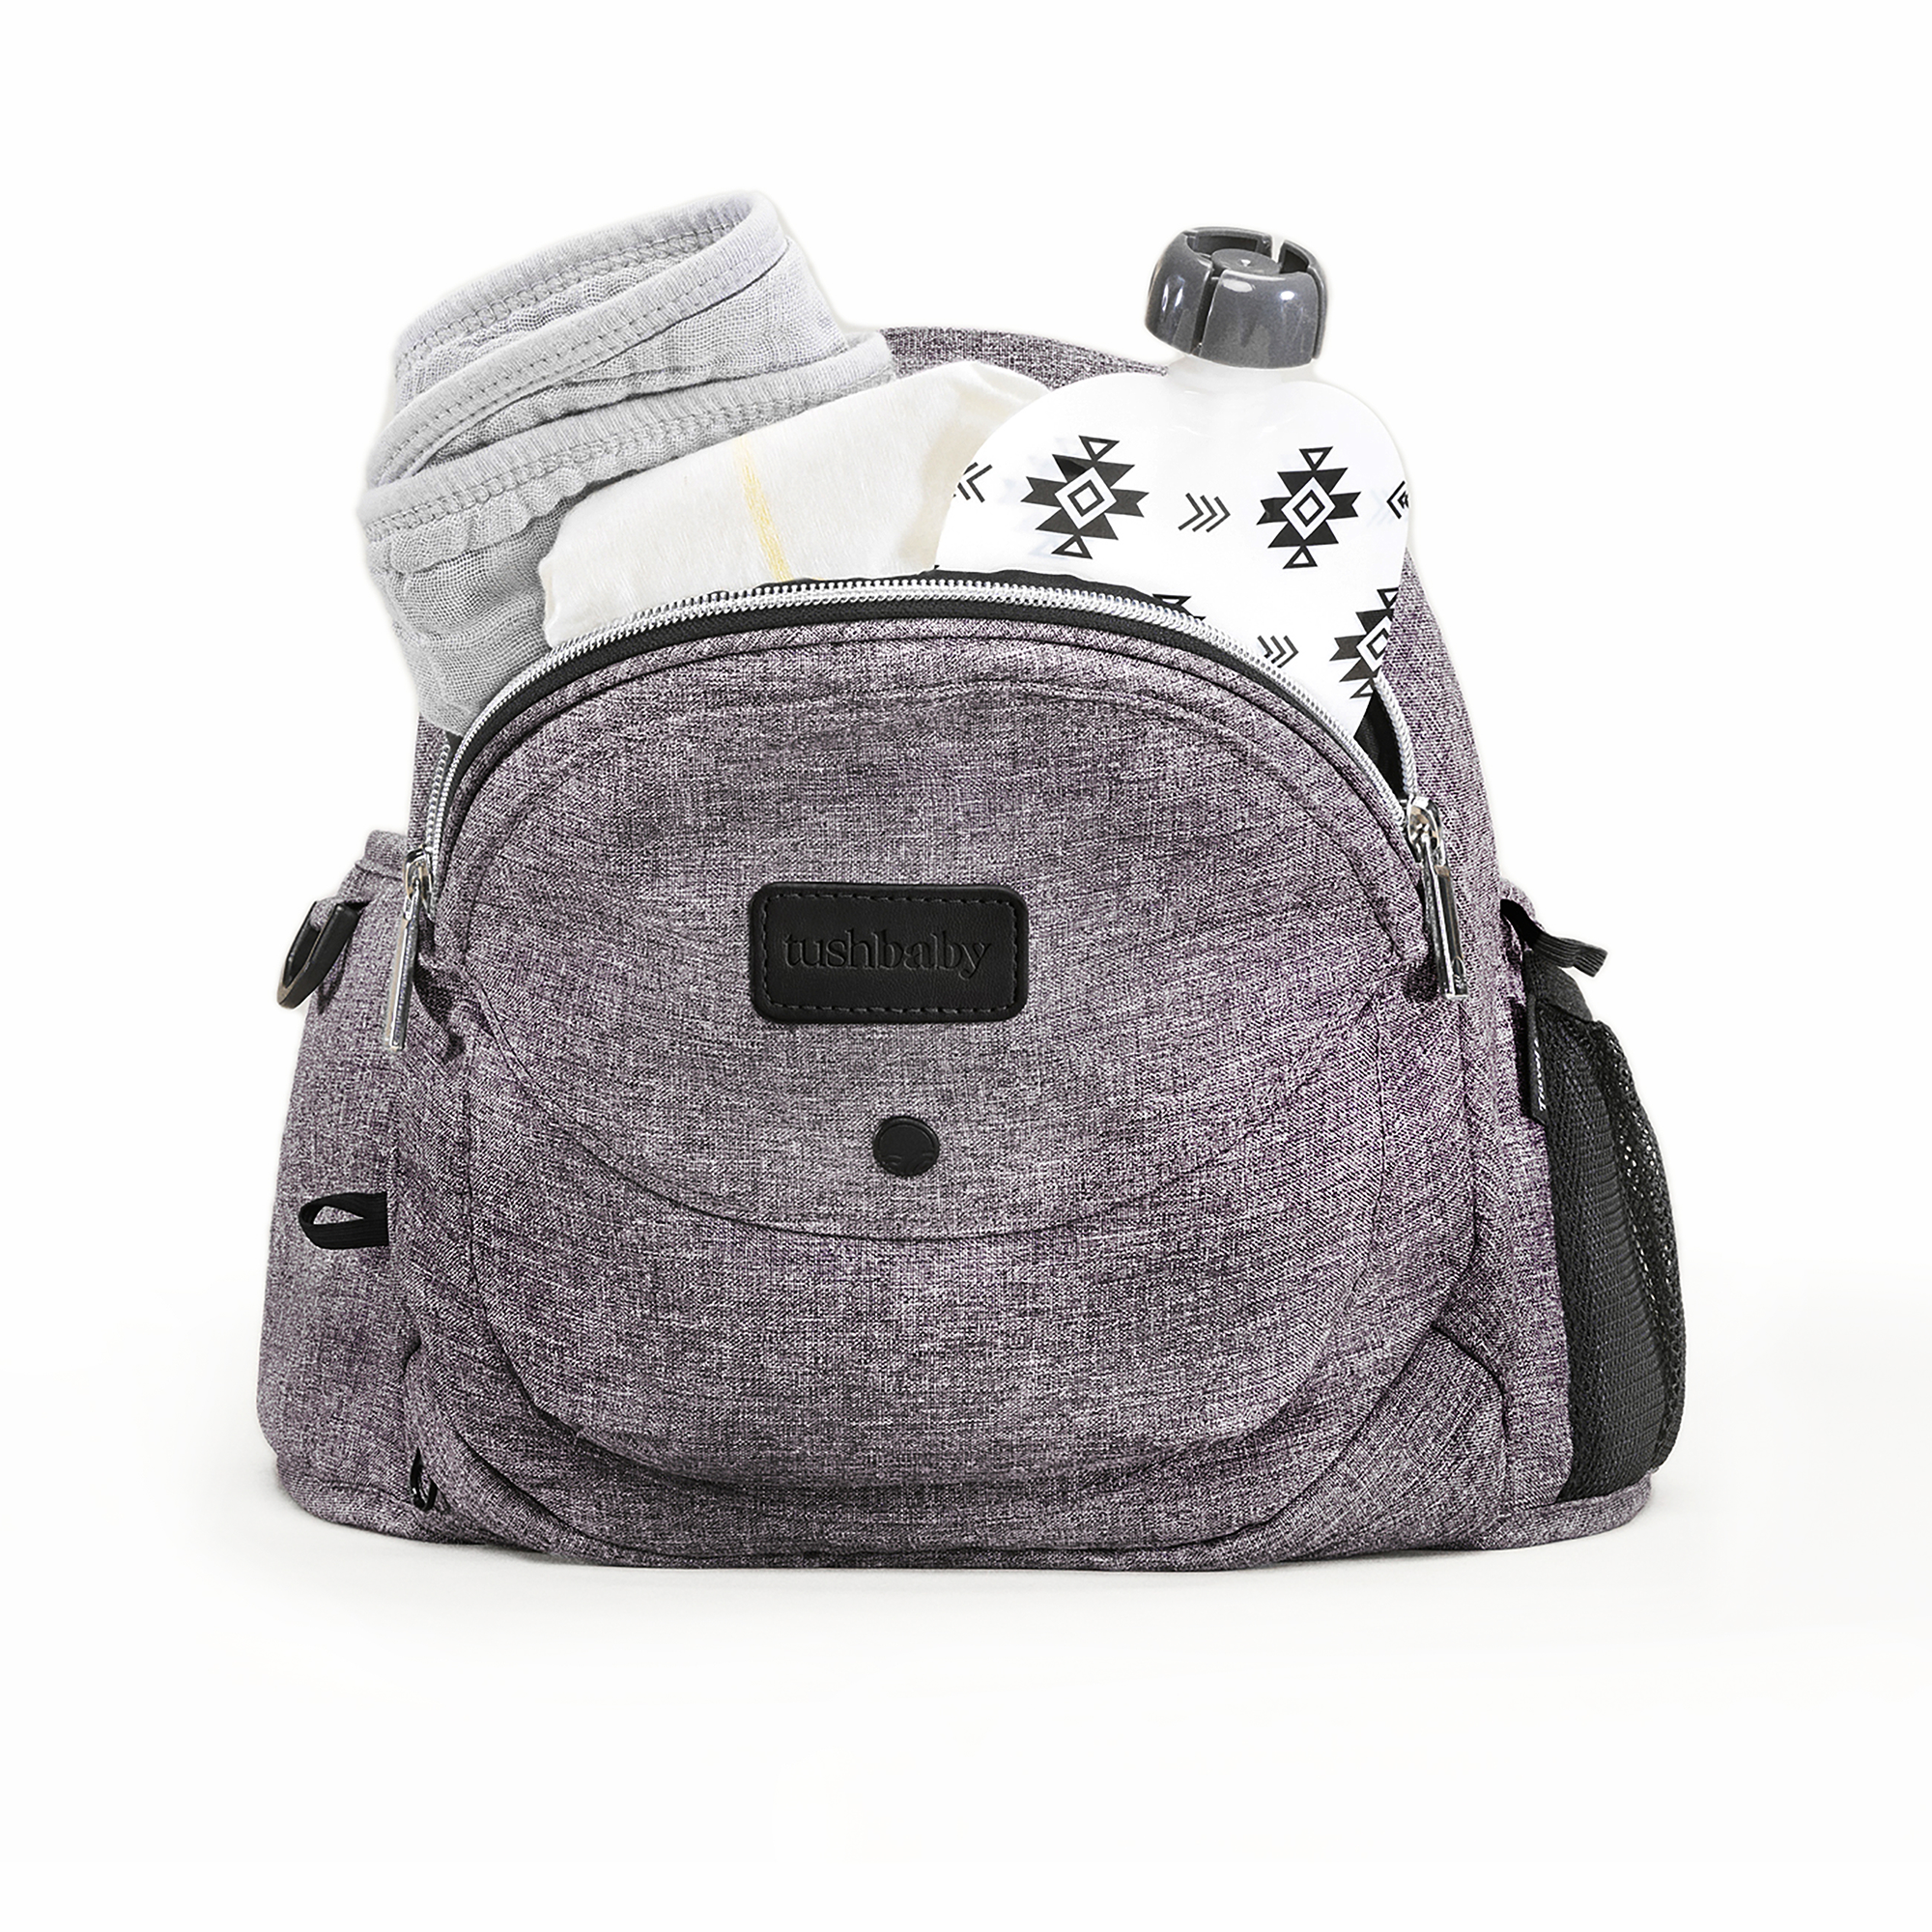 The Stylish Diaper Bag Backpack – Babyshok